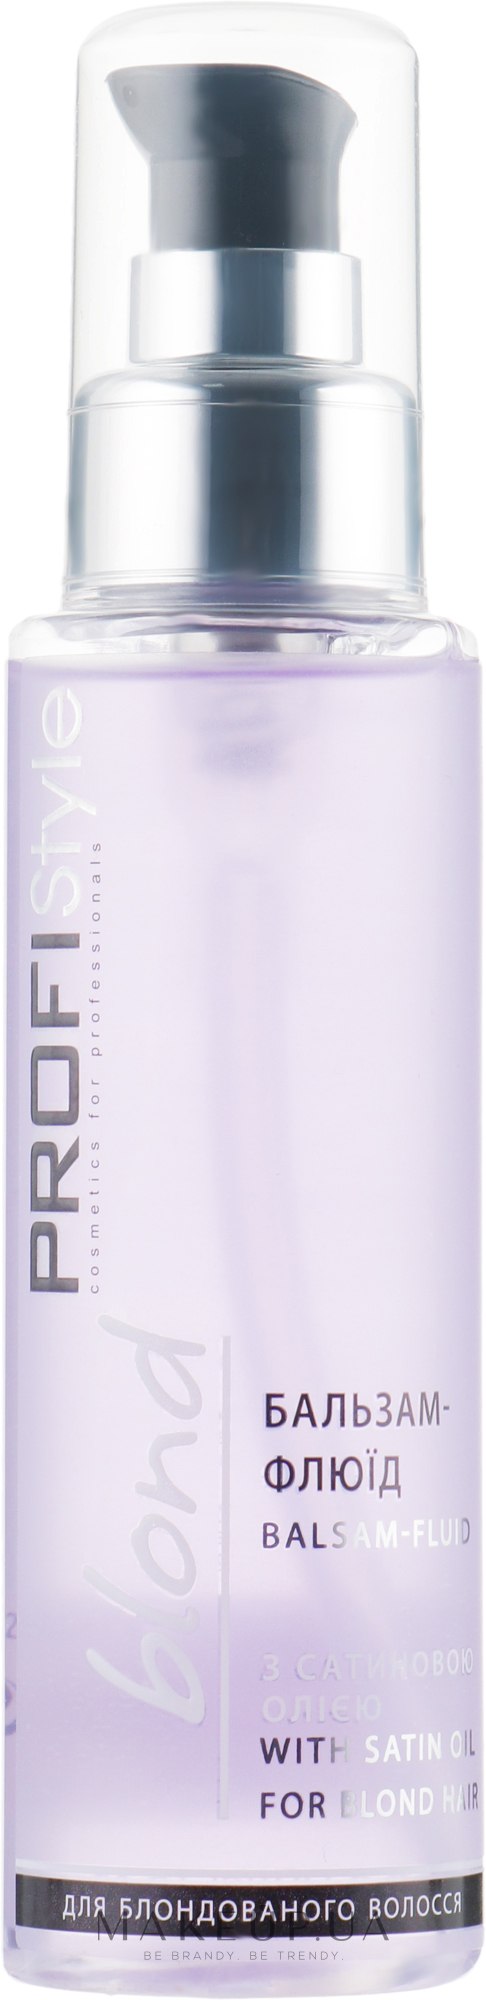 Бальзам флюїд для волосся, з сатиновою олією - Profi Style Blond With Satin Oil Balsam-Fluid — фото 100ml